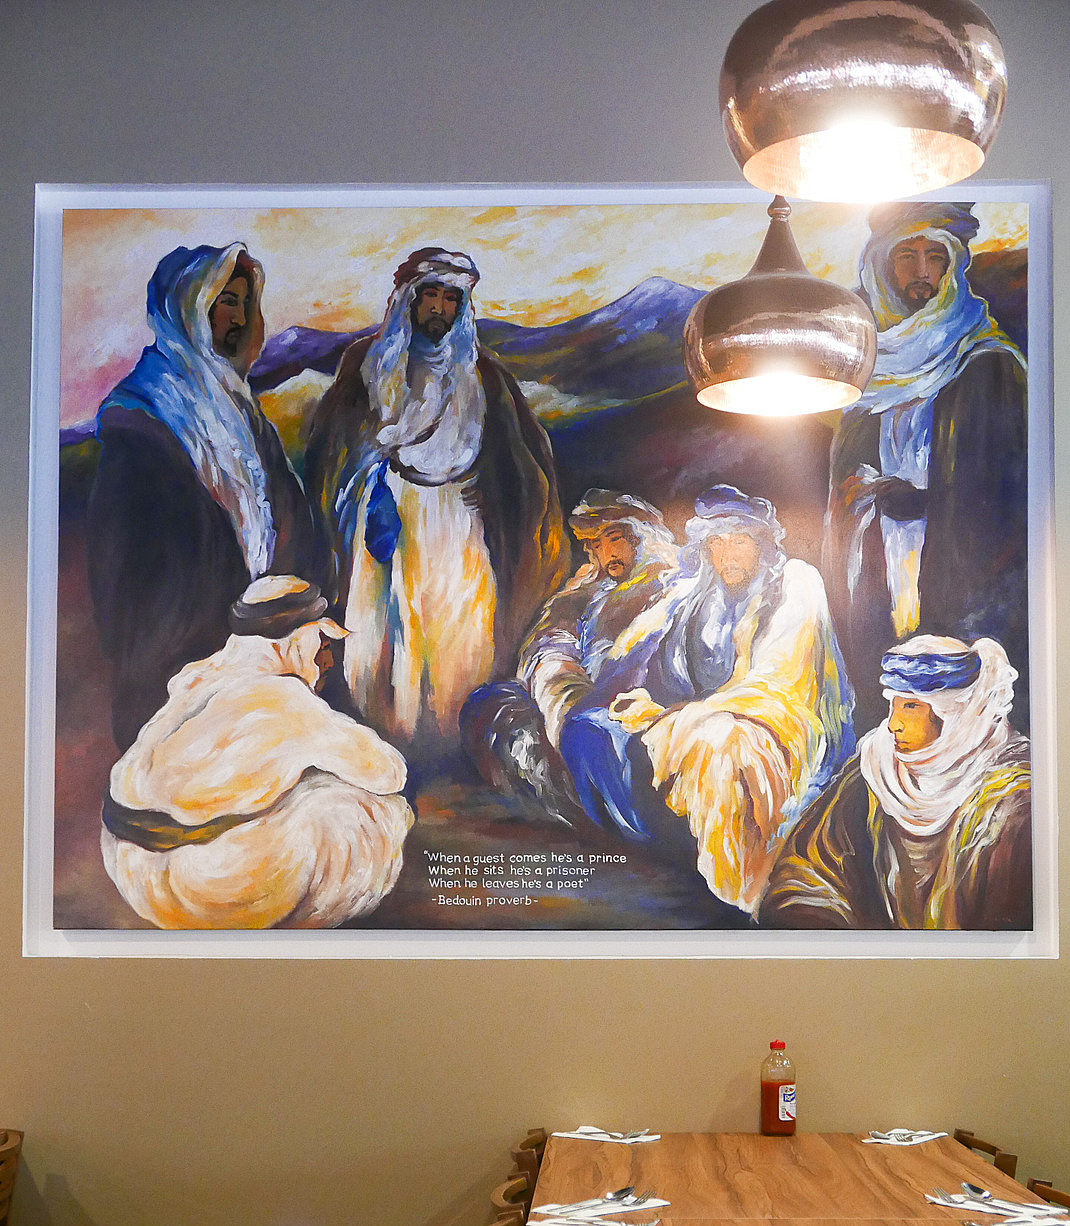 1. Bedouin Arabian Cuisine